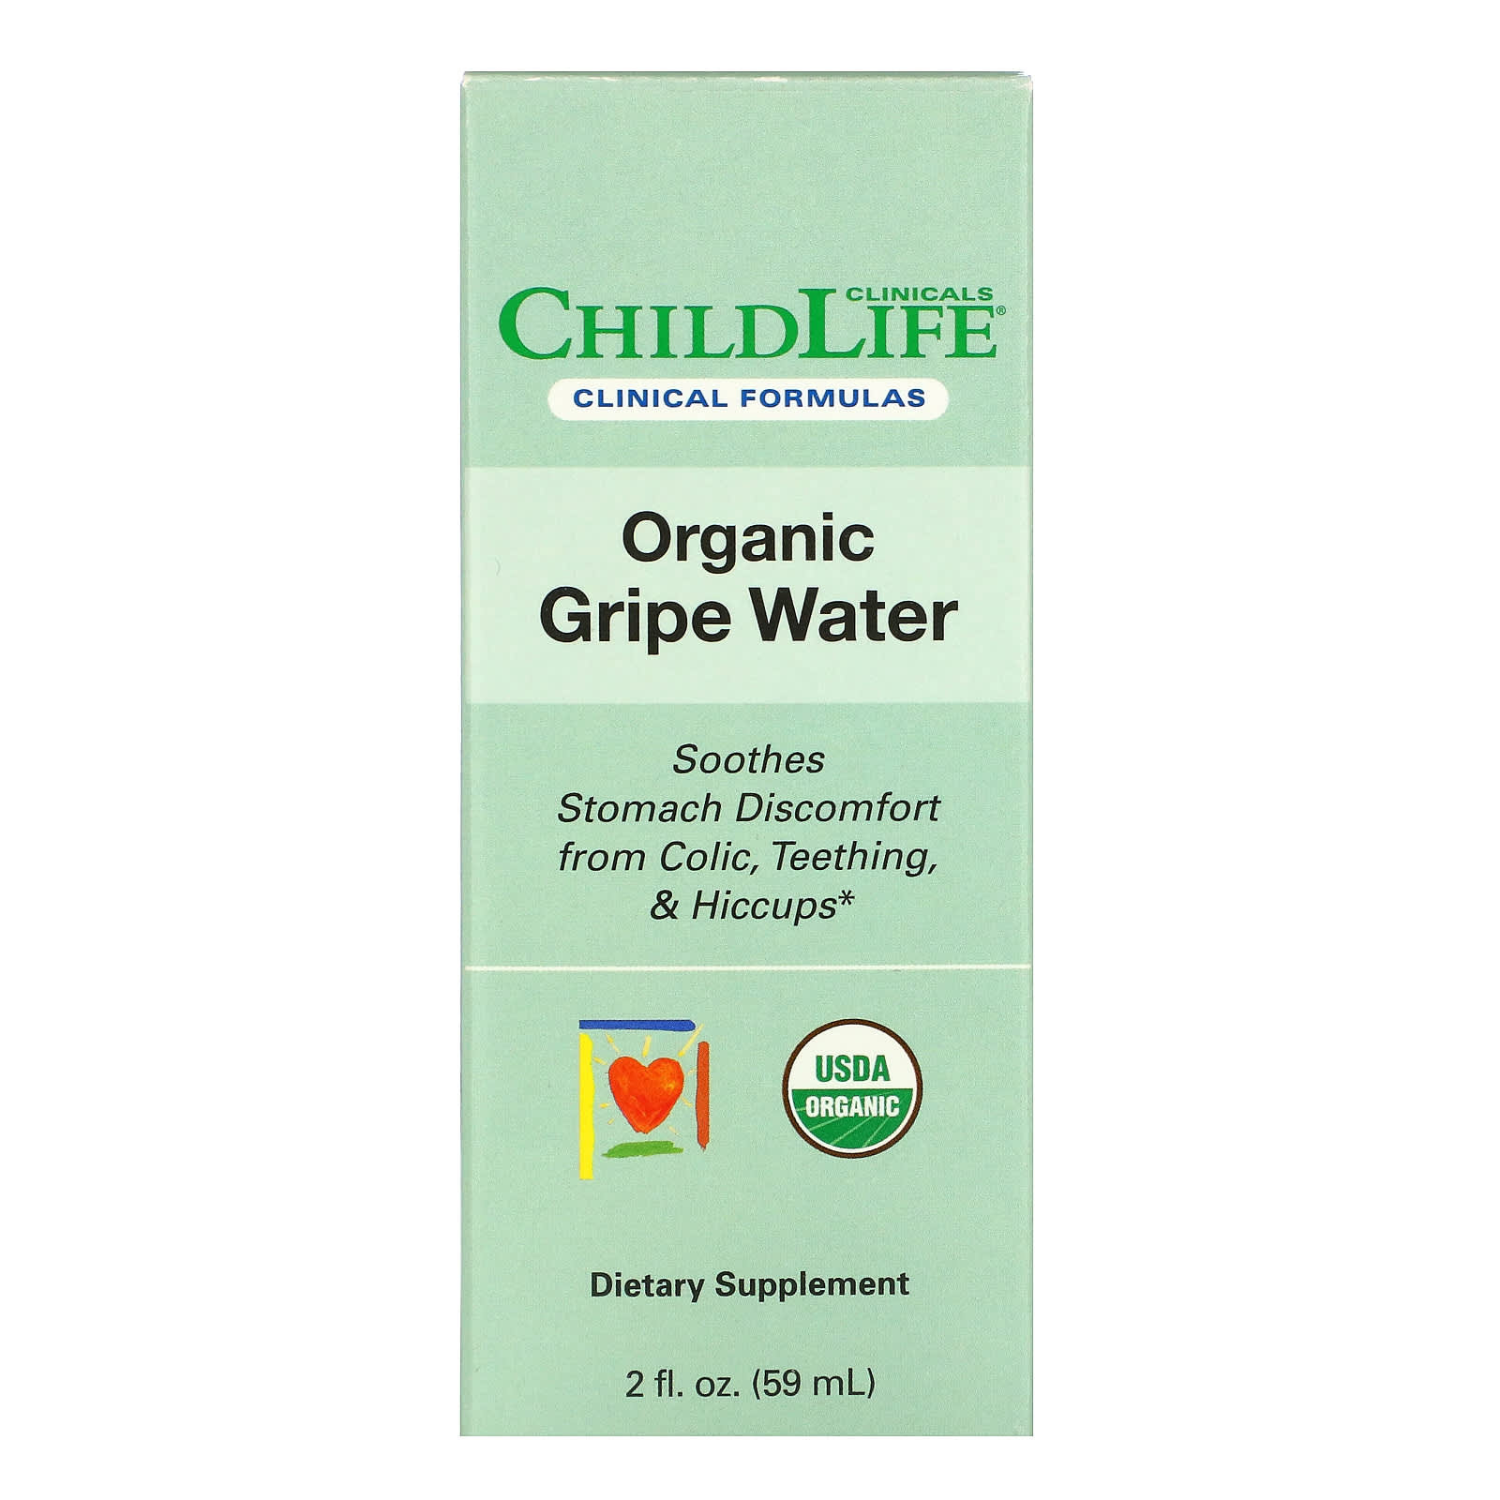 Childlife Clinicals, Organic Gripe Water, 2 fl oz (59 ml)